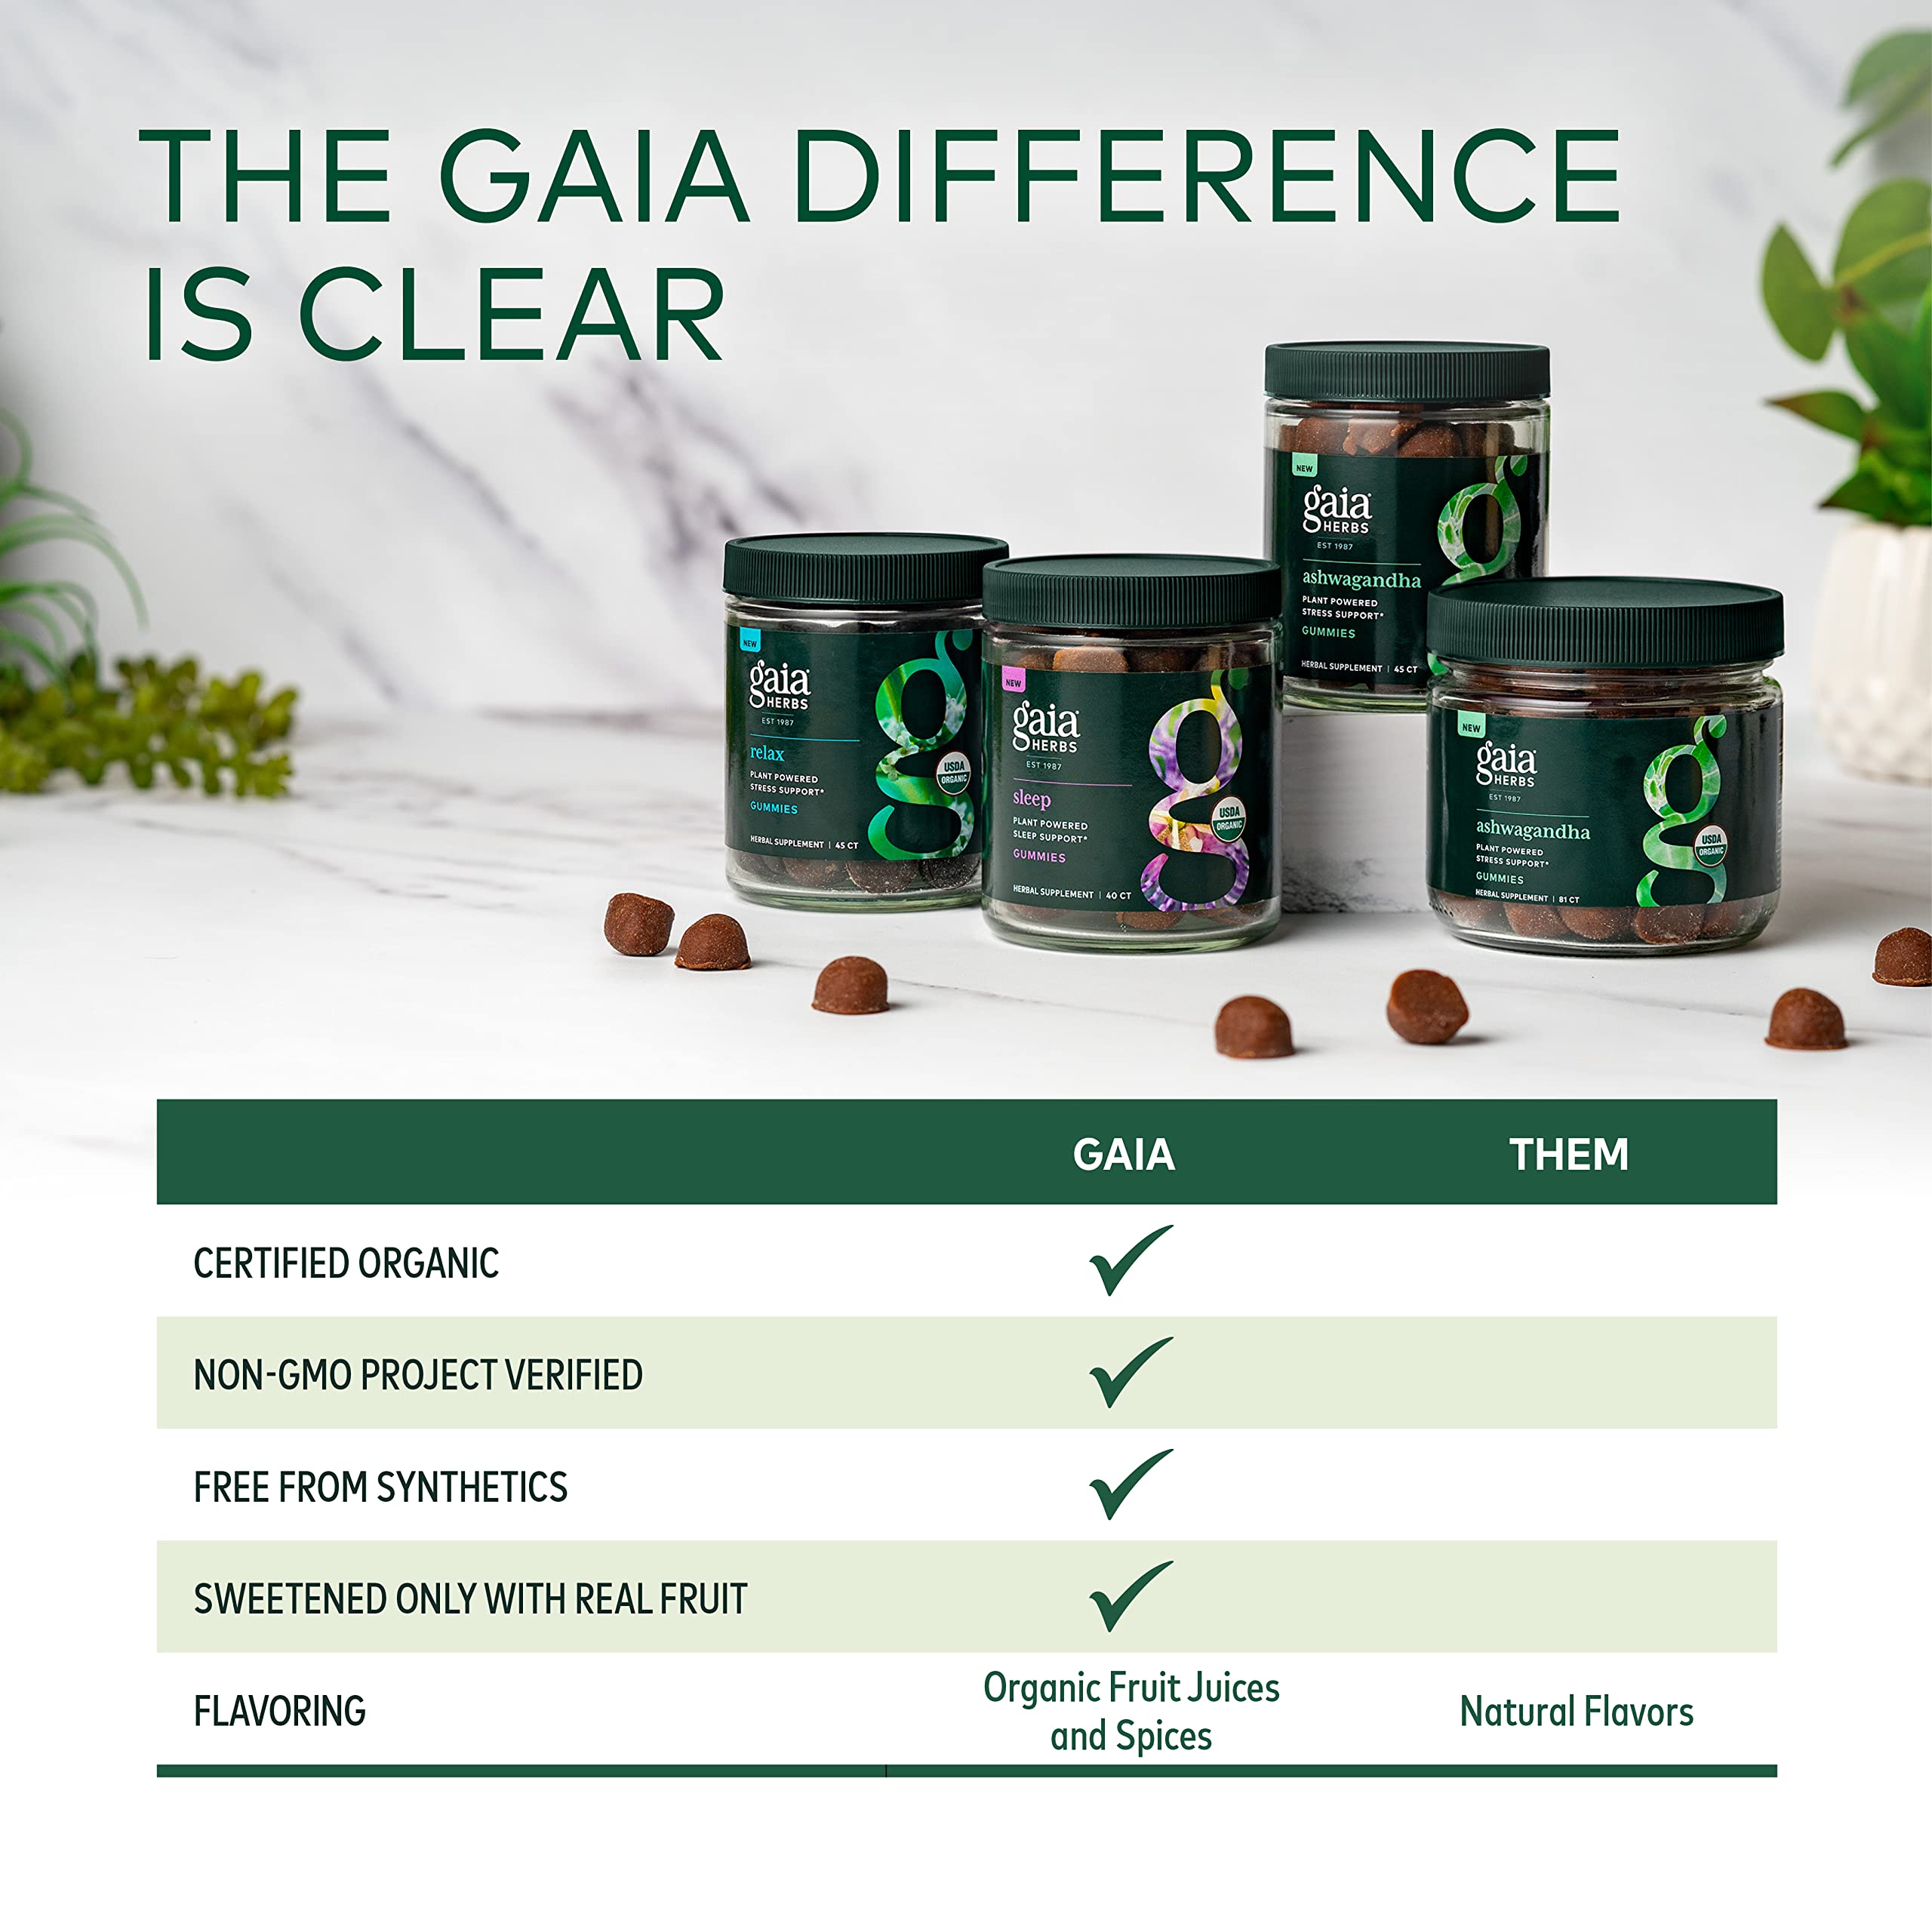 Gaia Herbs Organic Ashwagandha Gummies, Stress Support, Cinnamon, Ginger, Gluten Free, Vegan, 45 Count